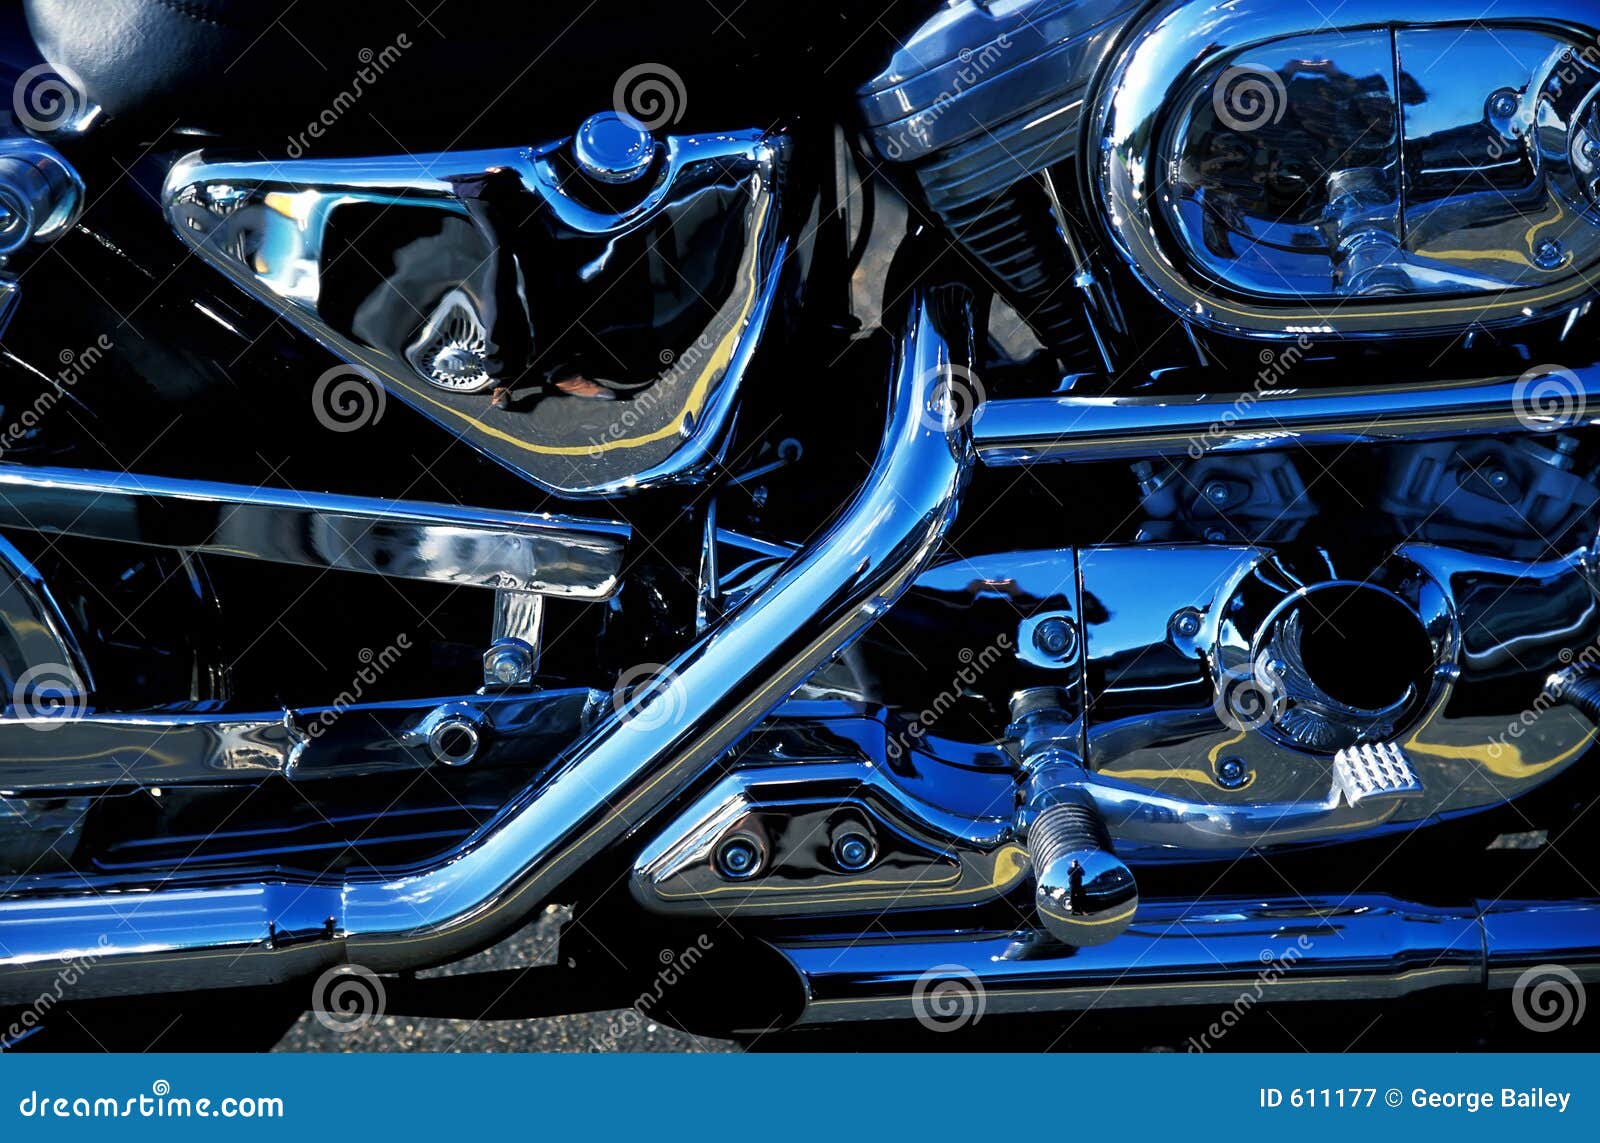 Motorcycle Detail stock image. Image of pipes, honda, blue - 611177